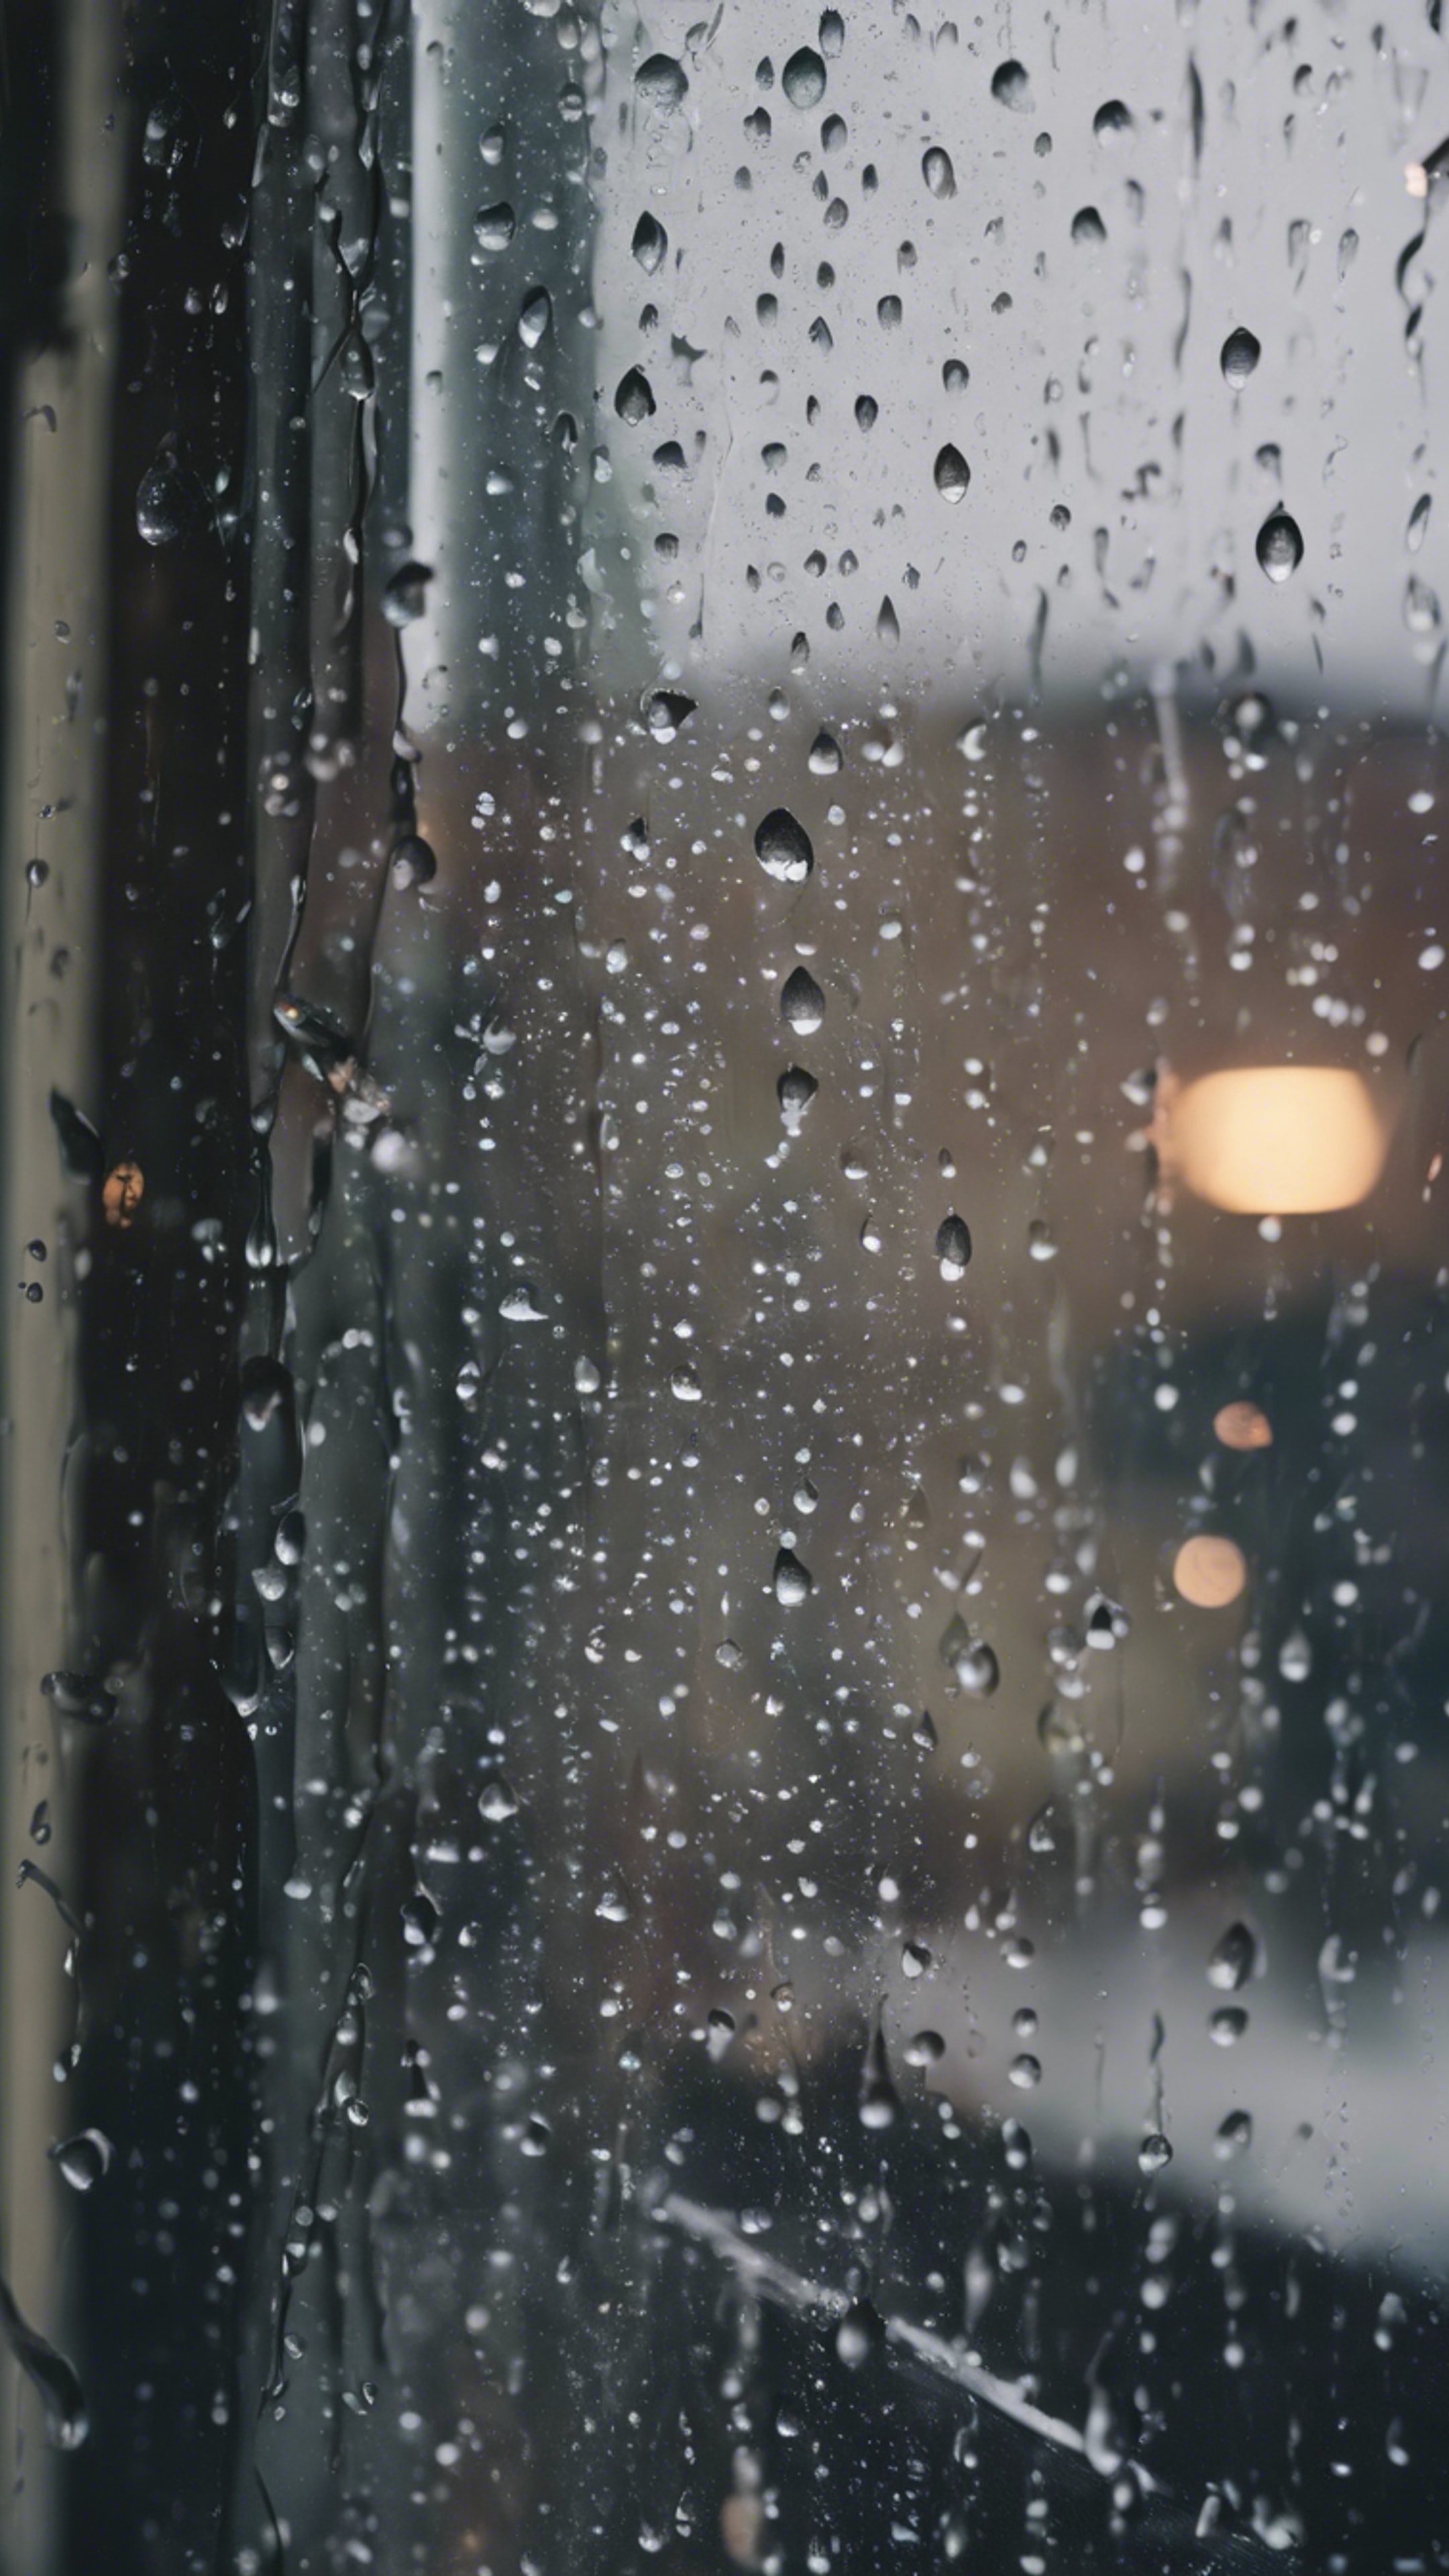 A heavy rainstorm viewed through a window, the droplets streaking down the glass Hình nền[548369da7c5b4ee9bdb0]